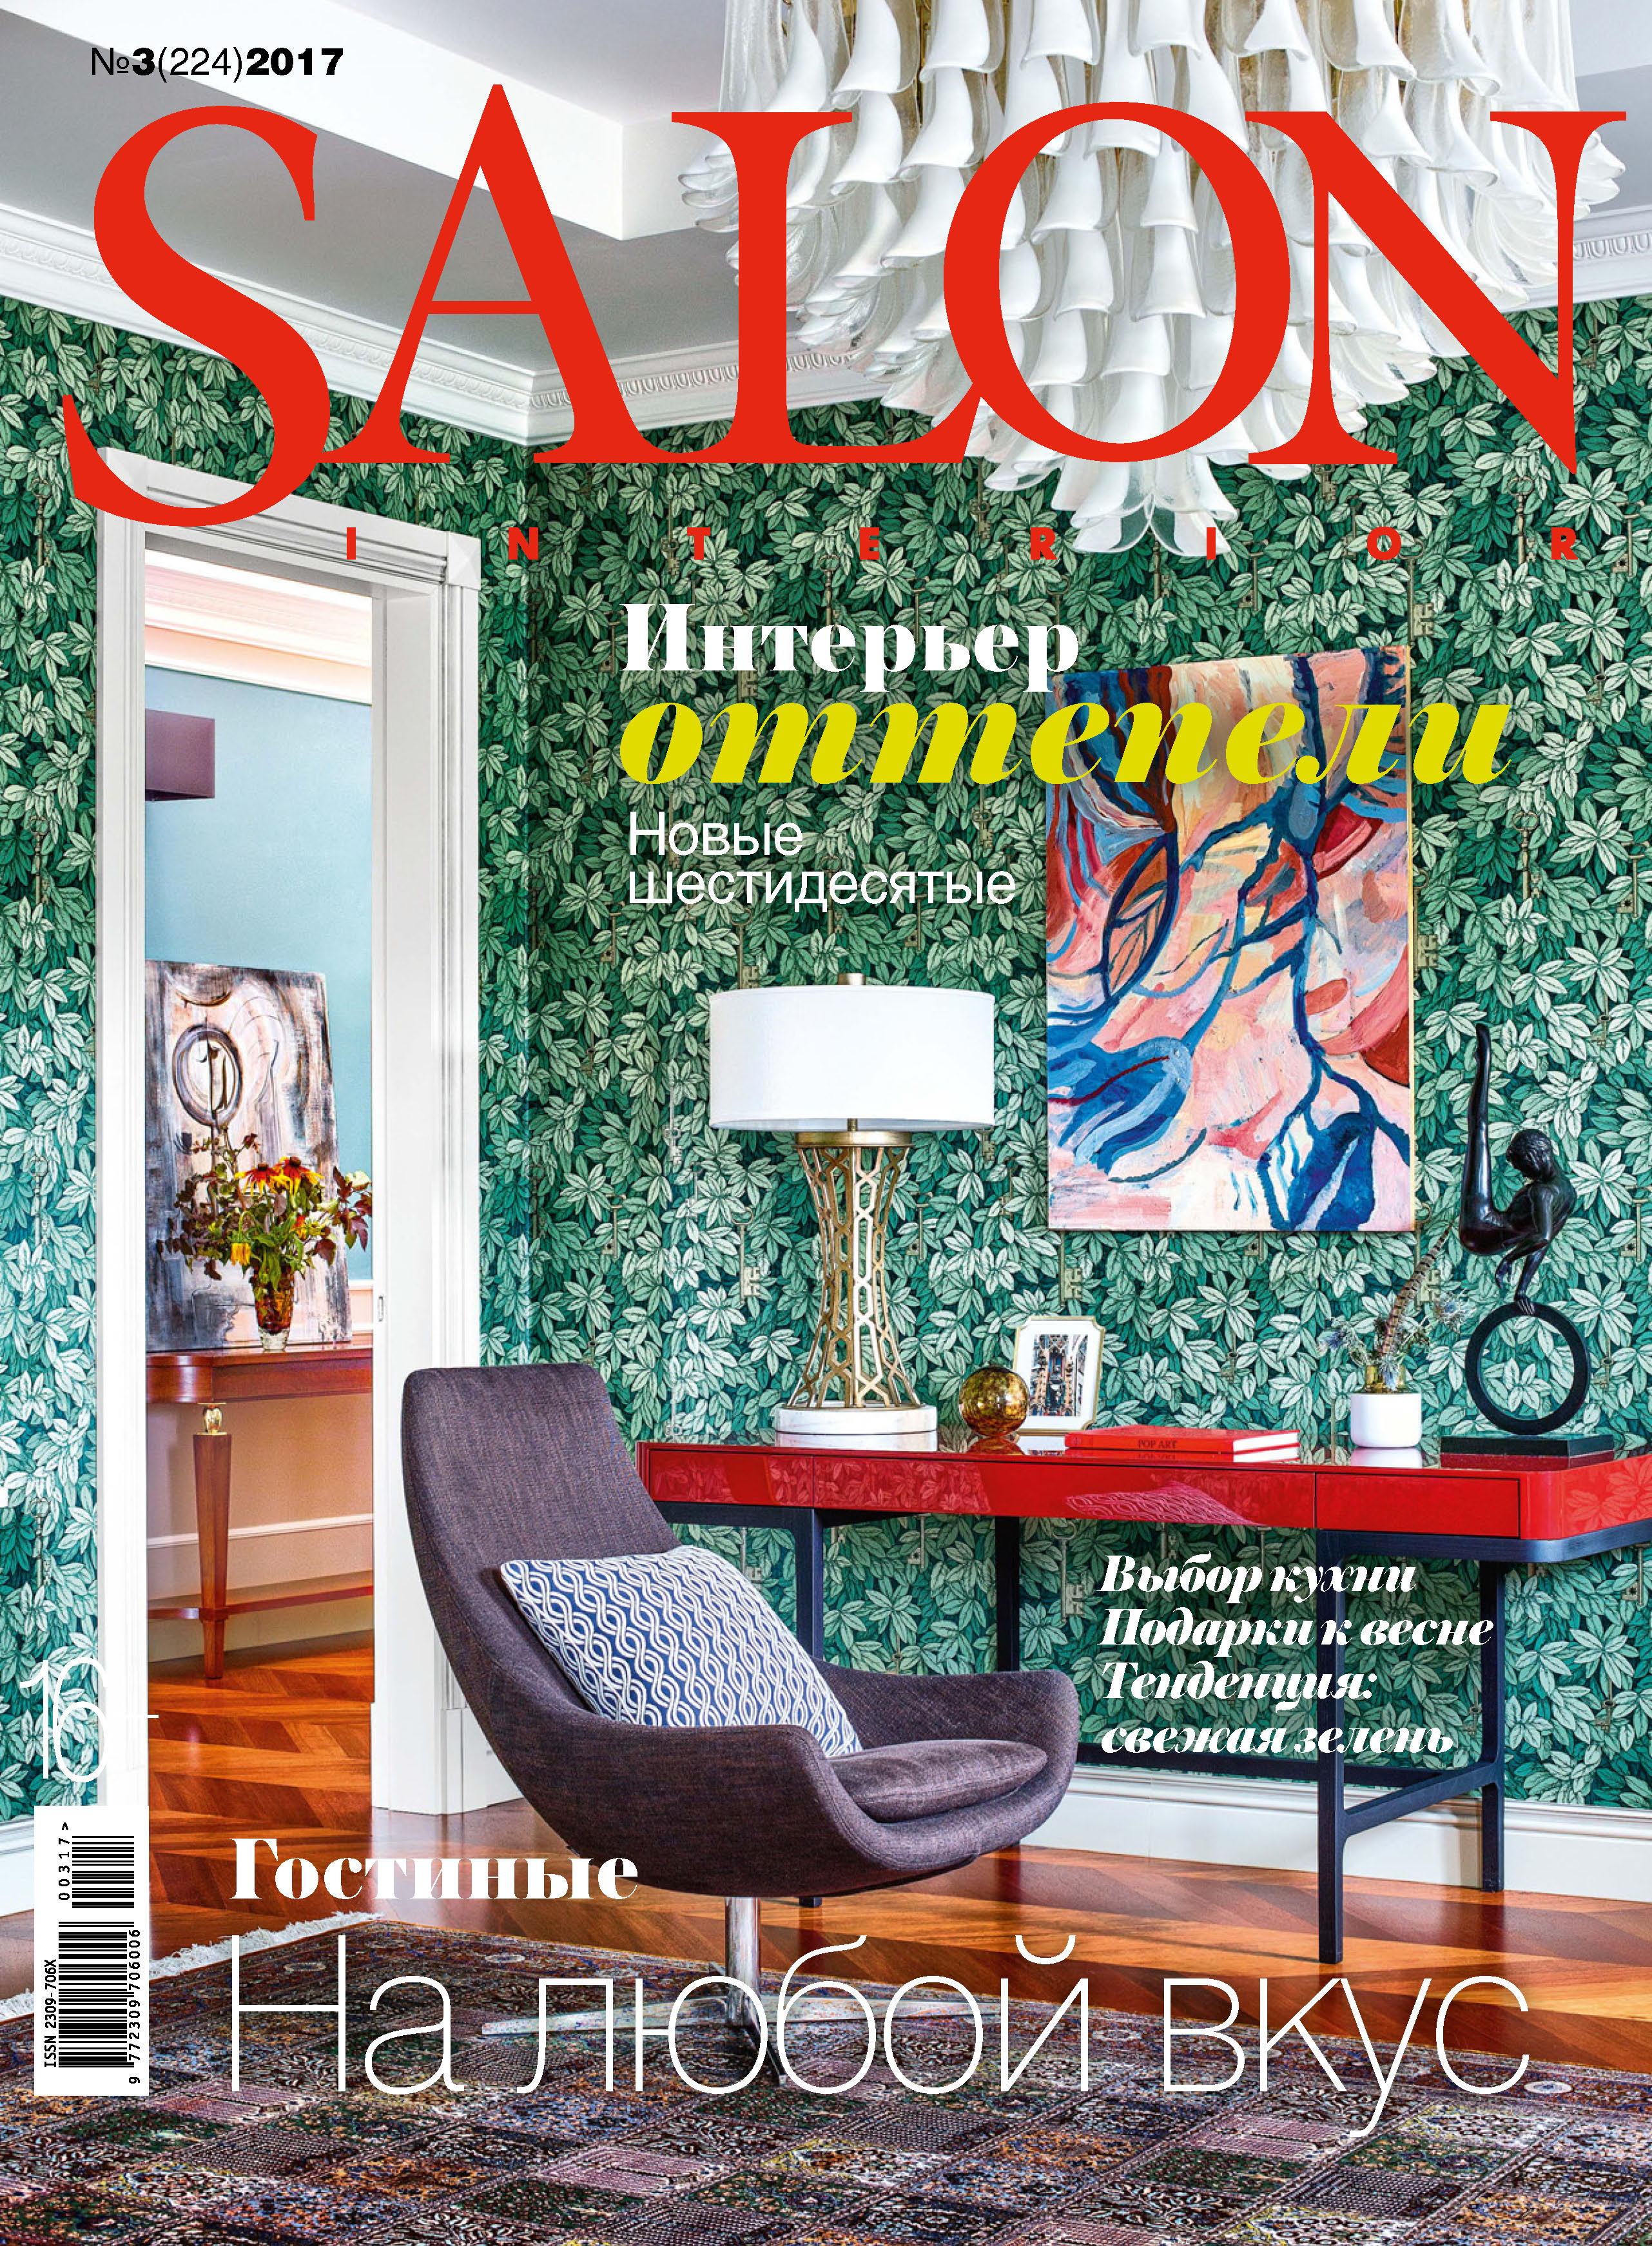 SALON-interior№03/2017